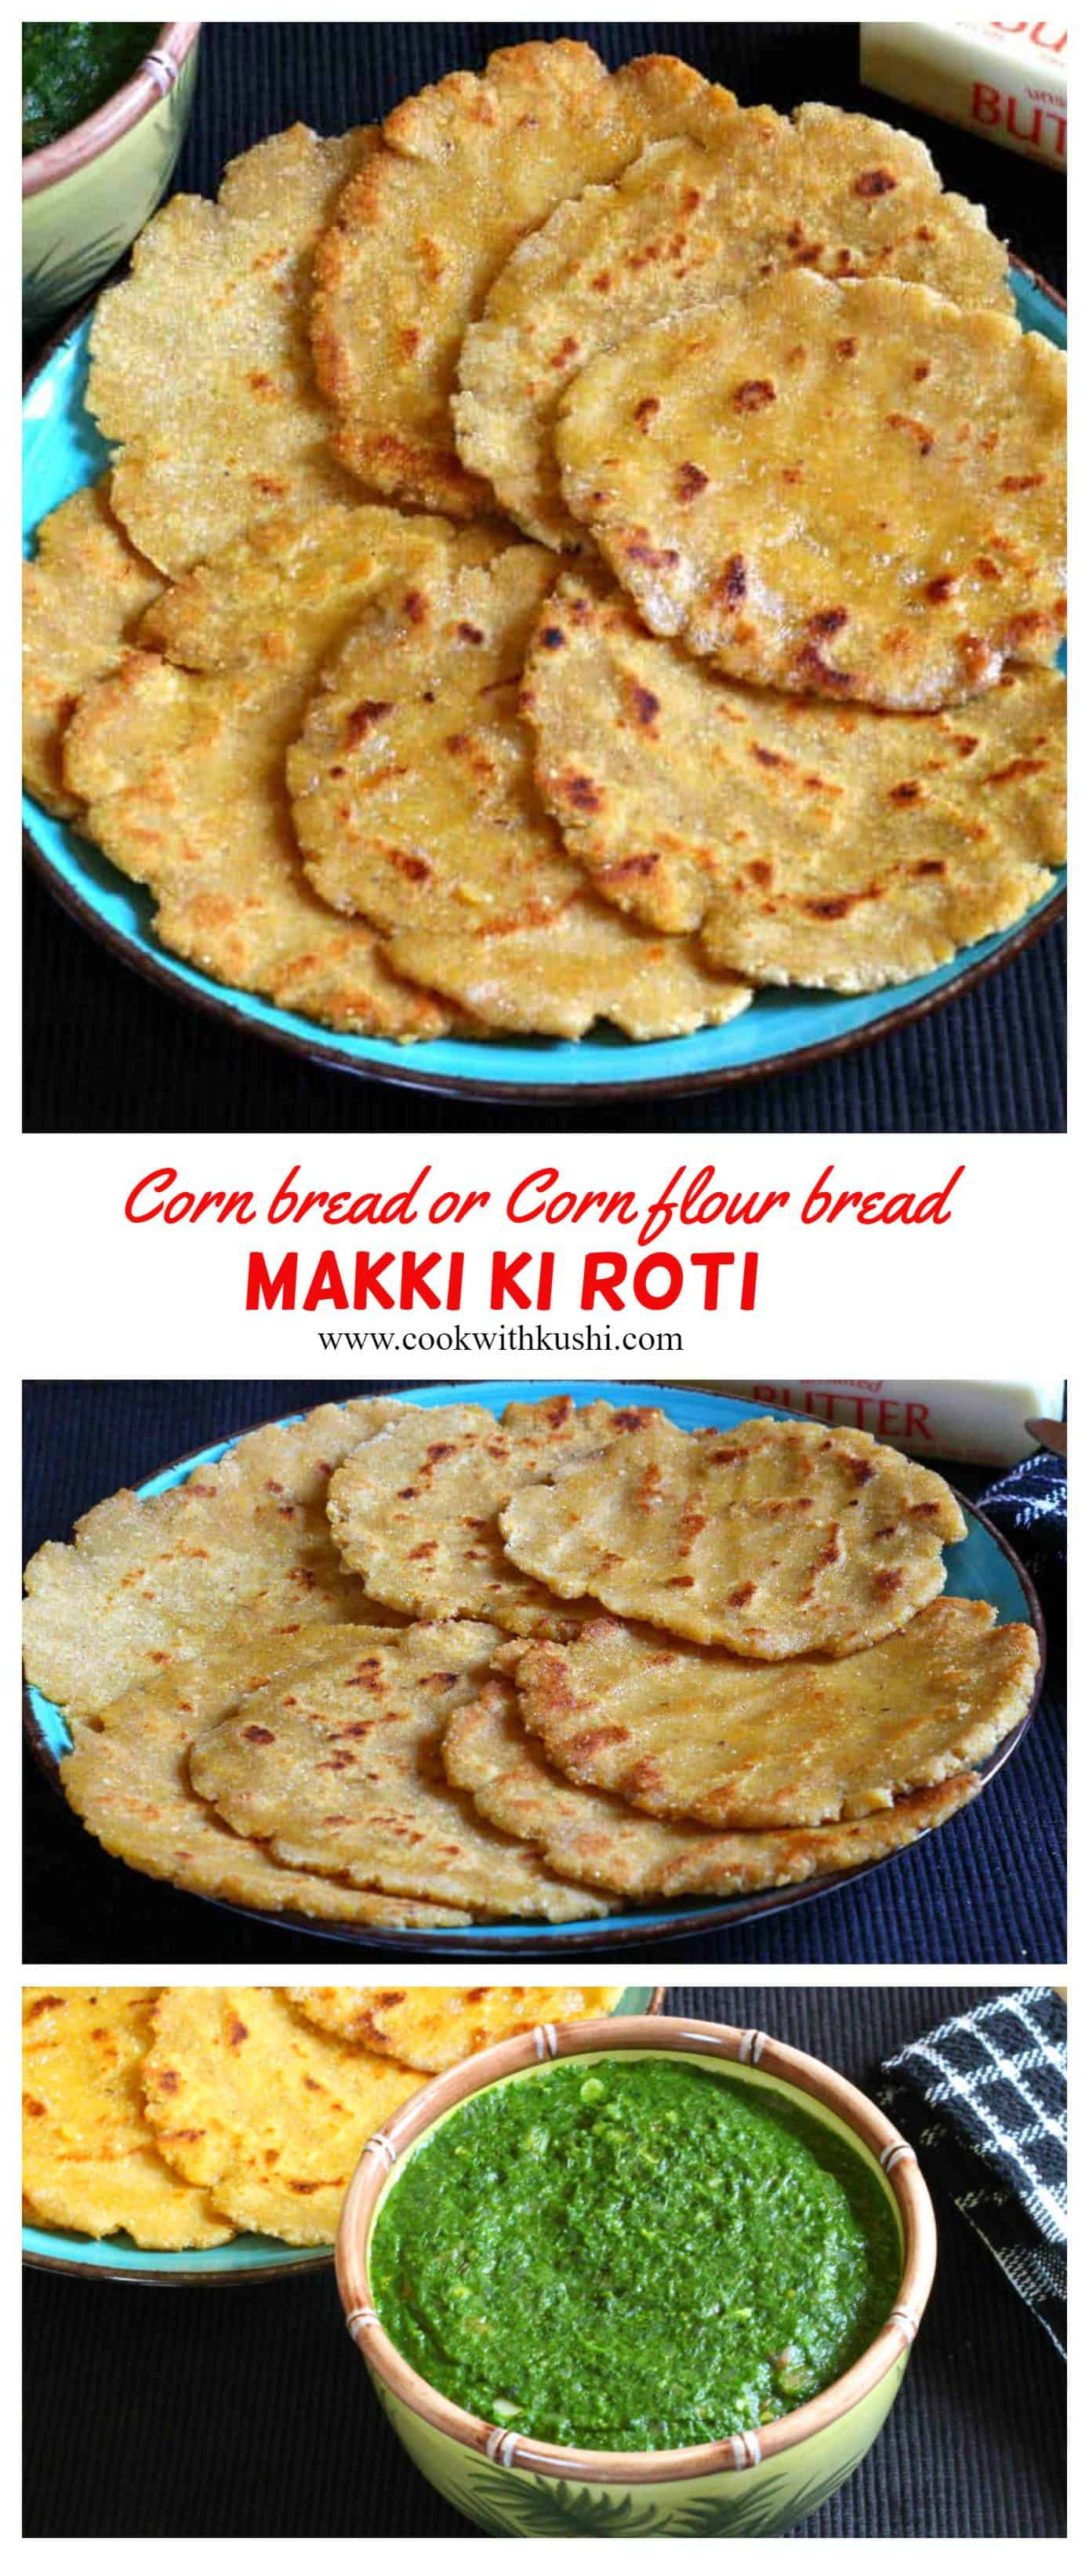 Corn bread or roti is a traditional healthy and delicious unleavened flat bread very popular in Punjab, India. Makki Ki Roti is prepared specially during winter using maize flour (makki ka atta) or cornmeal on tandoor oven or griddle (cast iron pan or tava). #easycornbreadrecipe #indianfood #indinbread #punjabifood #roti #winterrecipes #glutenfreebread #veganbread